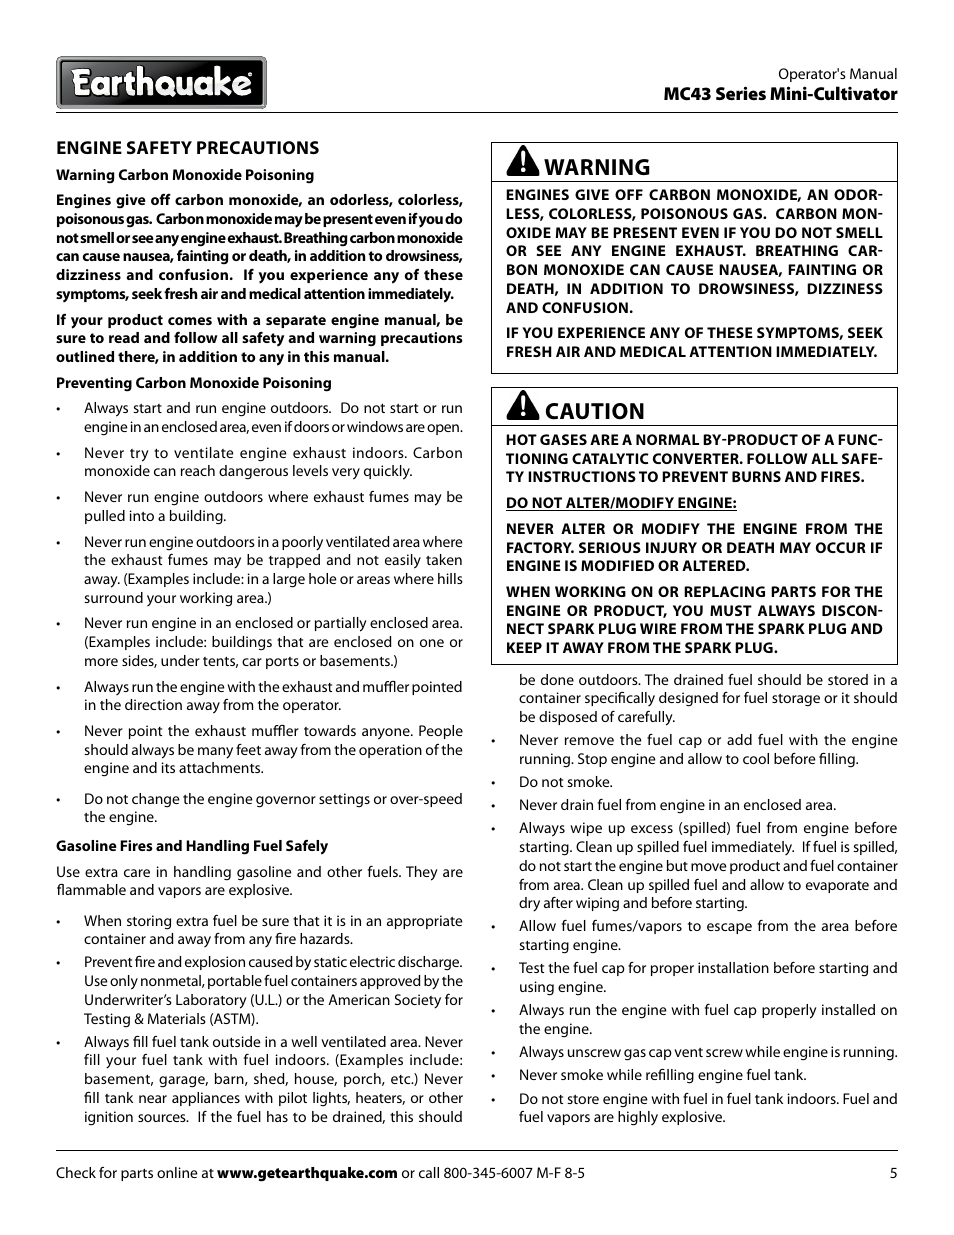 Caution, Warning | EarthQuake MC43E User Manual | Page 5 / 32